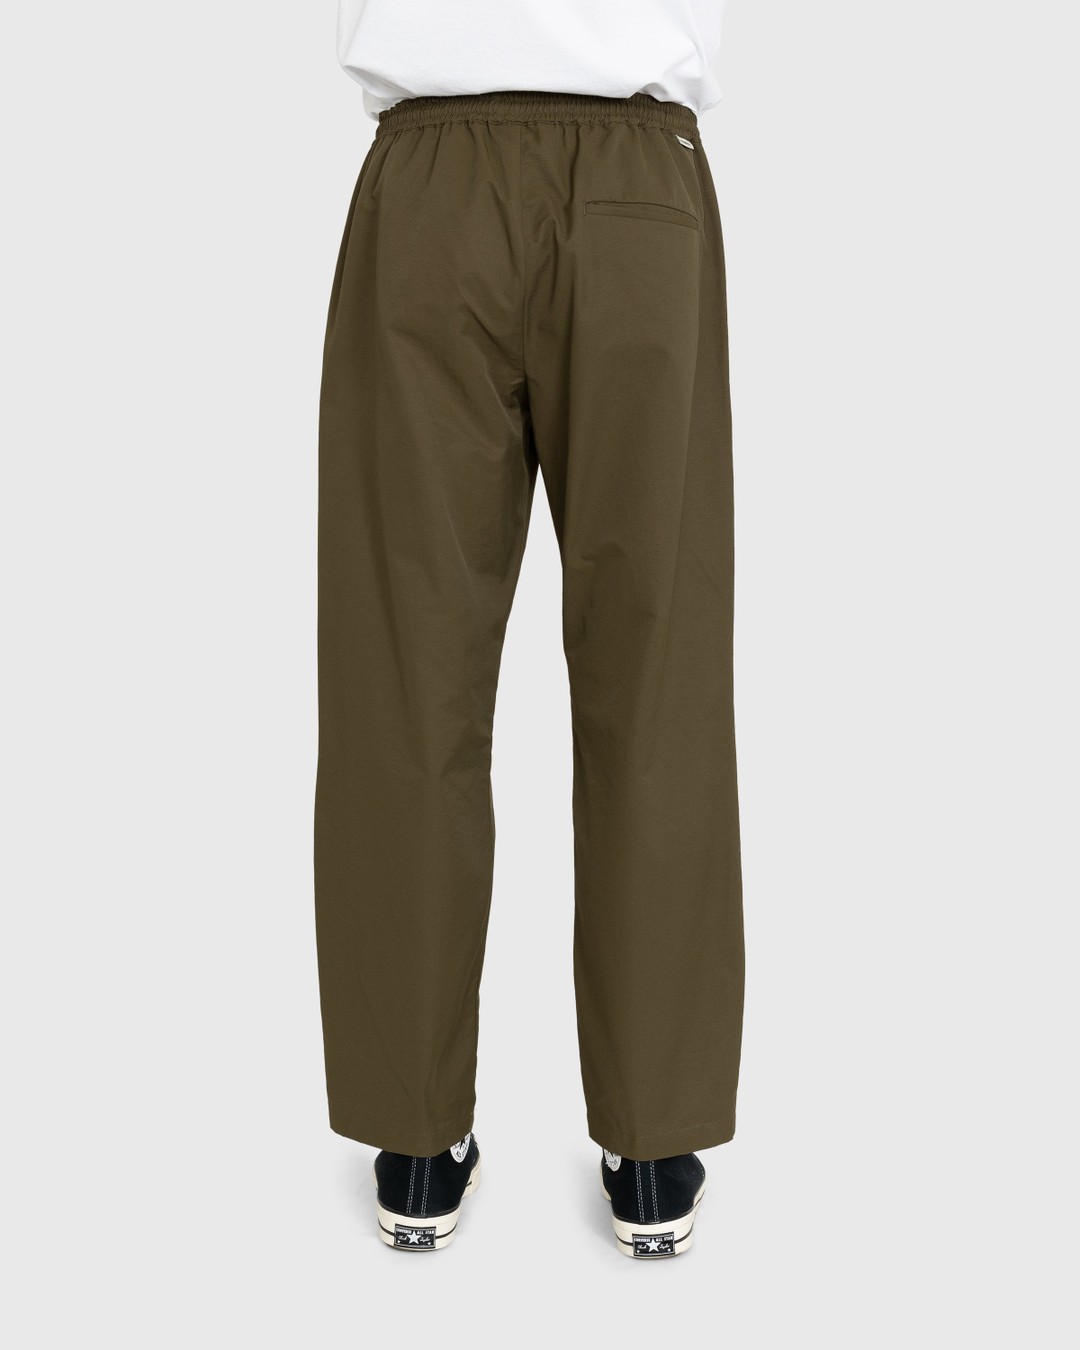 Highsnobiety – Cotton Nylon Elastic Pants Olive - Pants - Green - Image 4